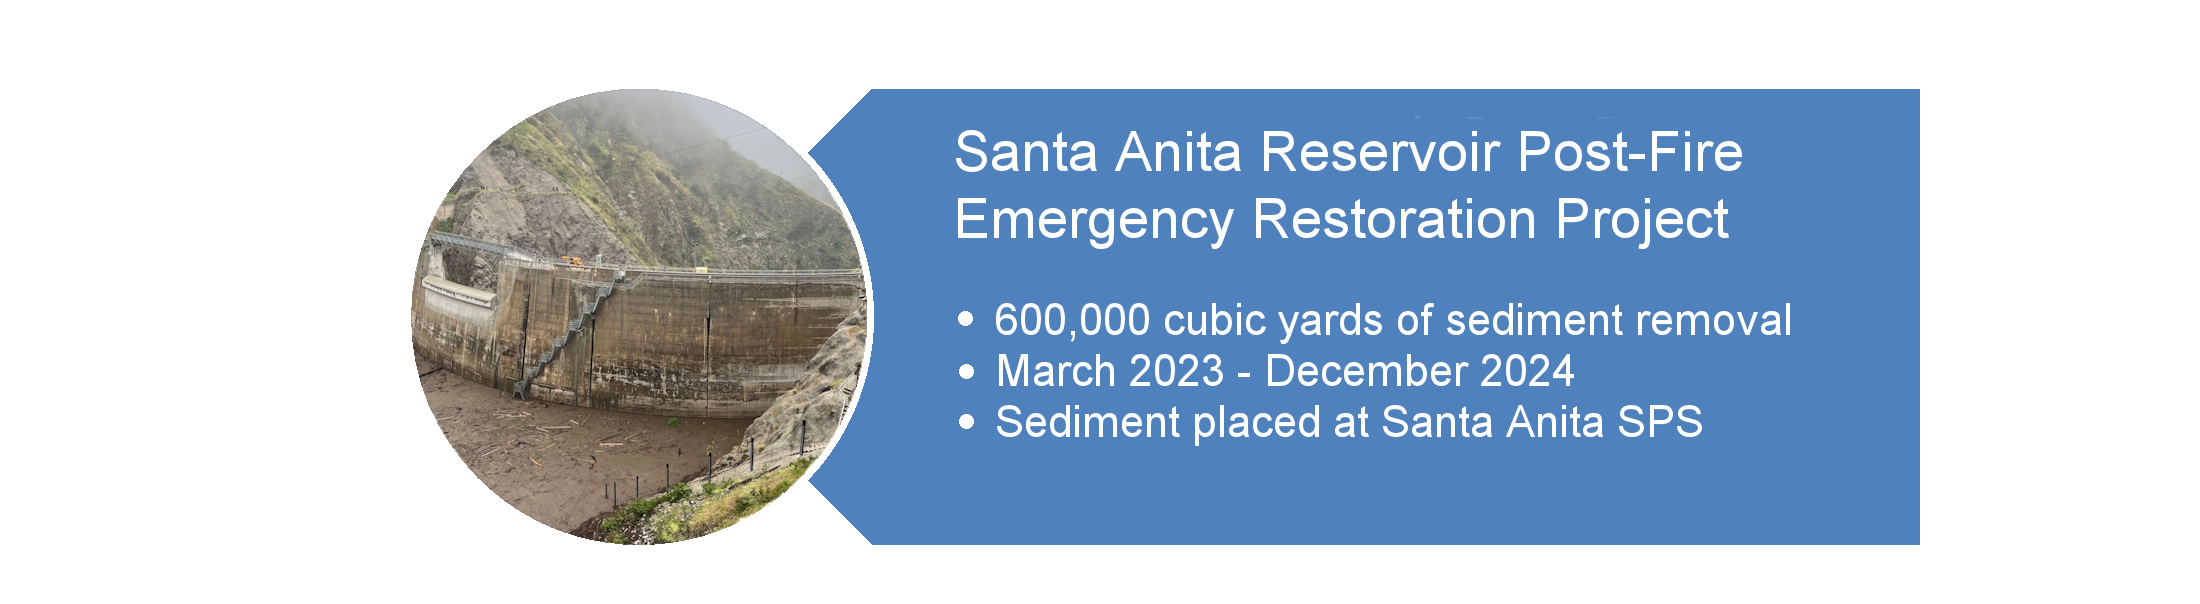 Highlights main points of Santa Anita Reservoir Project